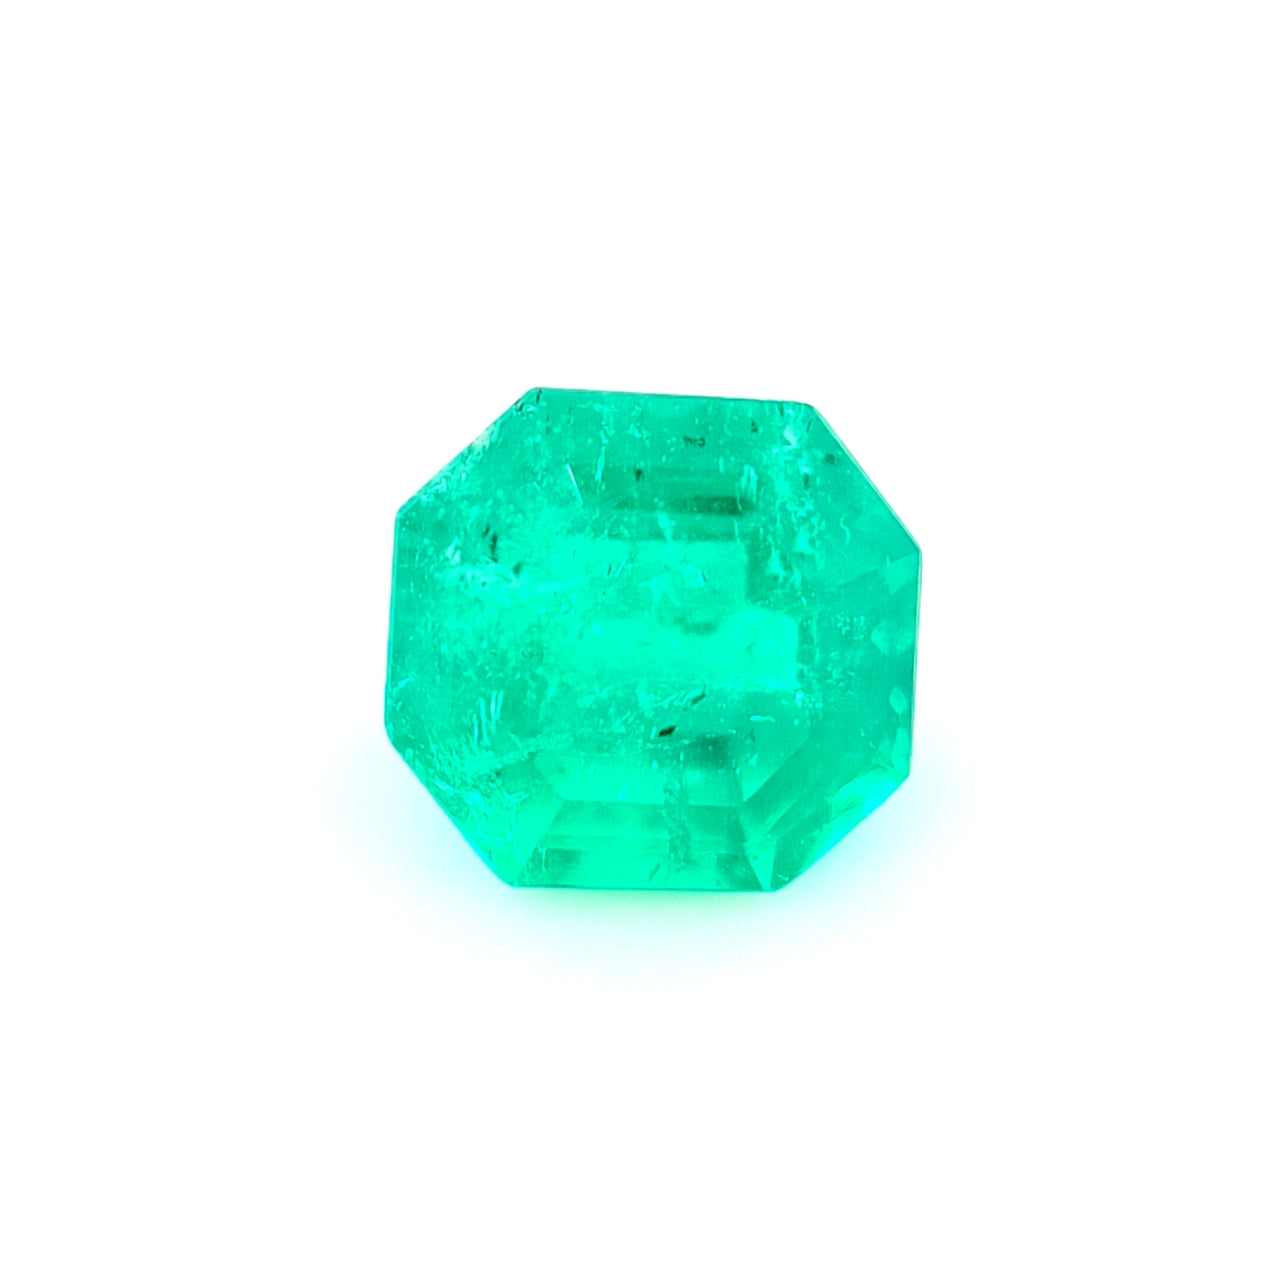 1.06ct Columbian Emerald, Green - Emerald cut